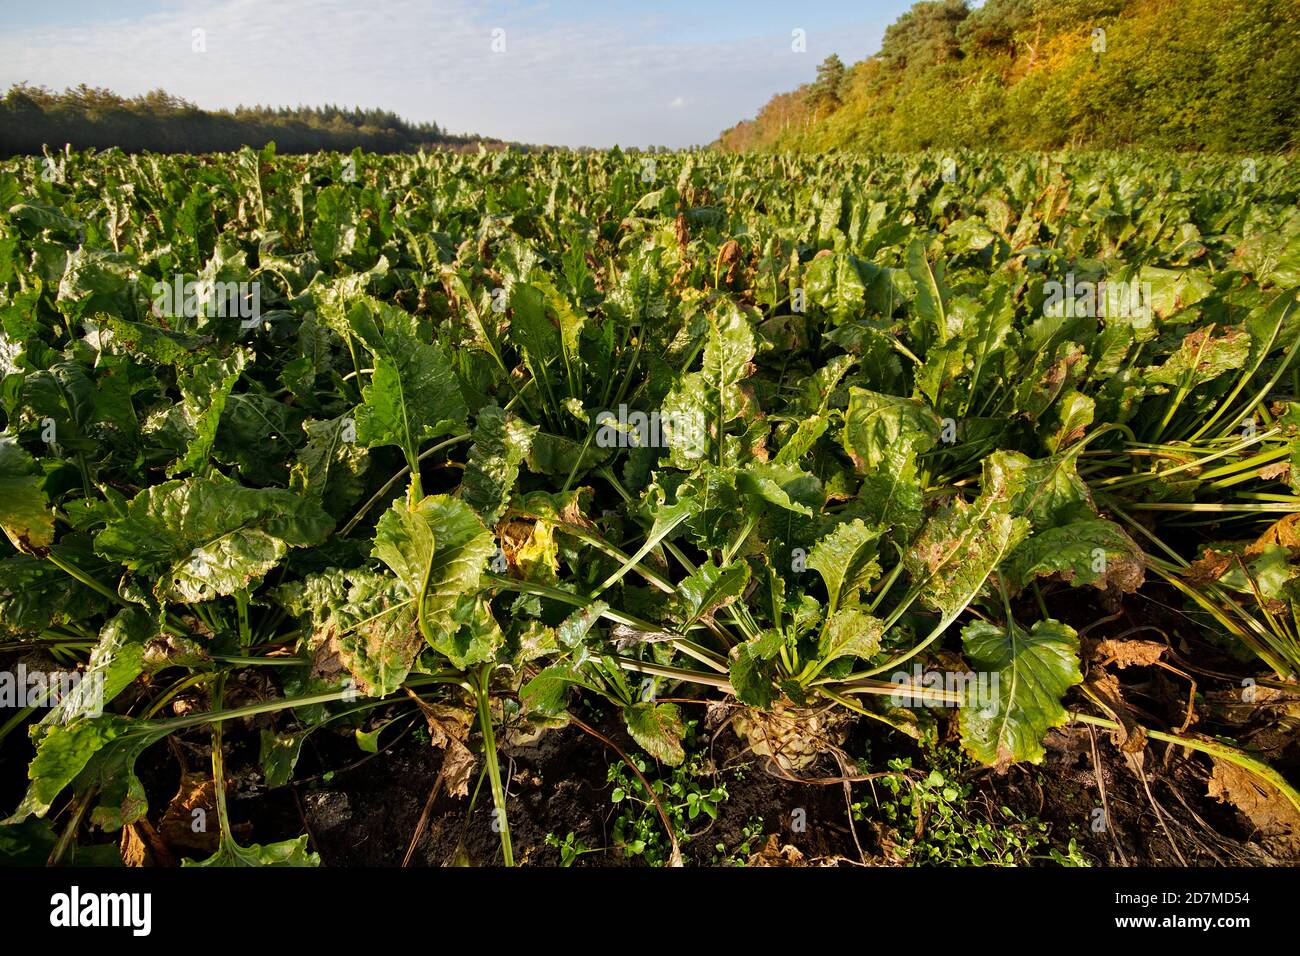 Field of sugar beet, growing on a field under a blue sky Stock Photo